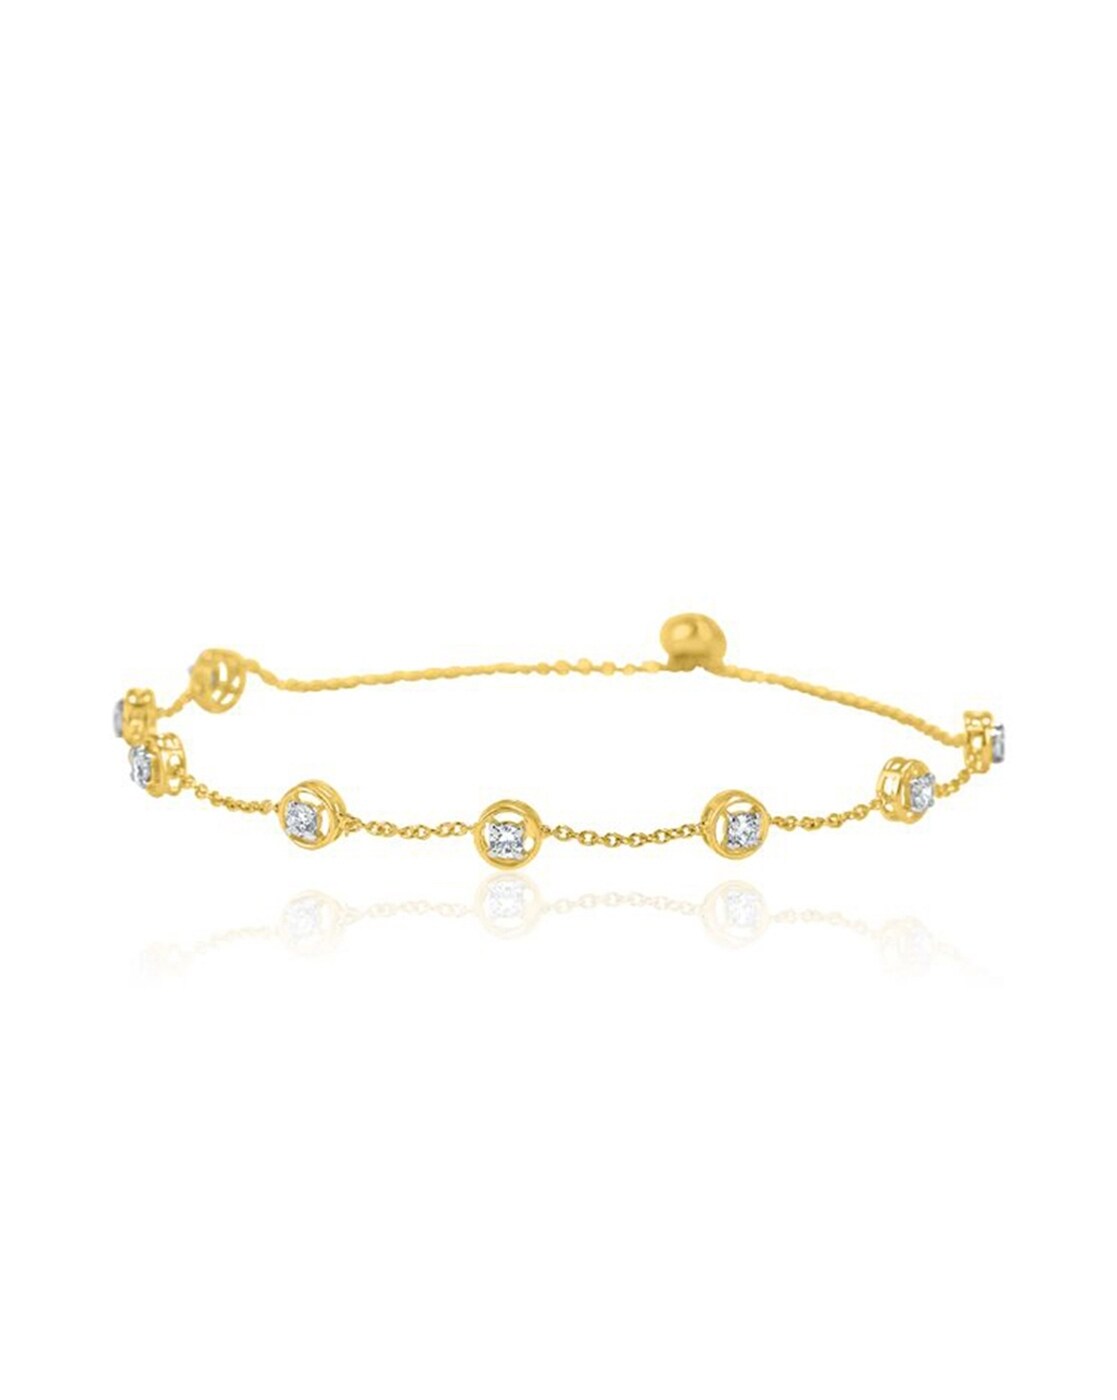 Buy Stylish Designer Women Bracelet Gold Plated Jewelry